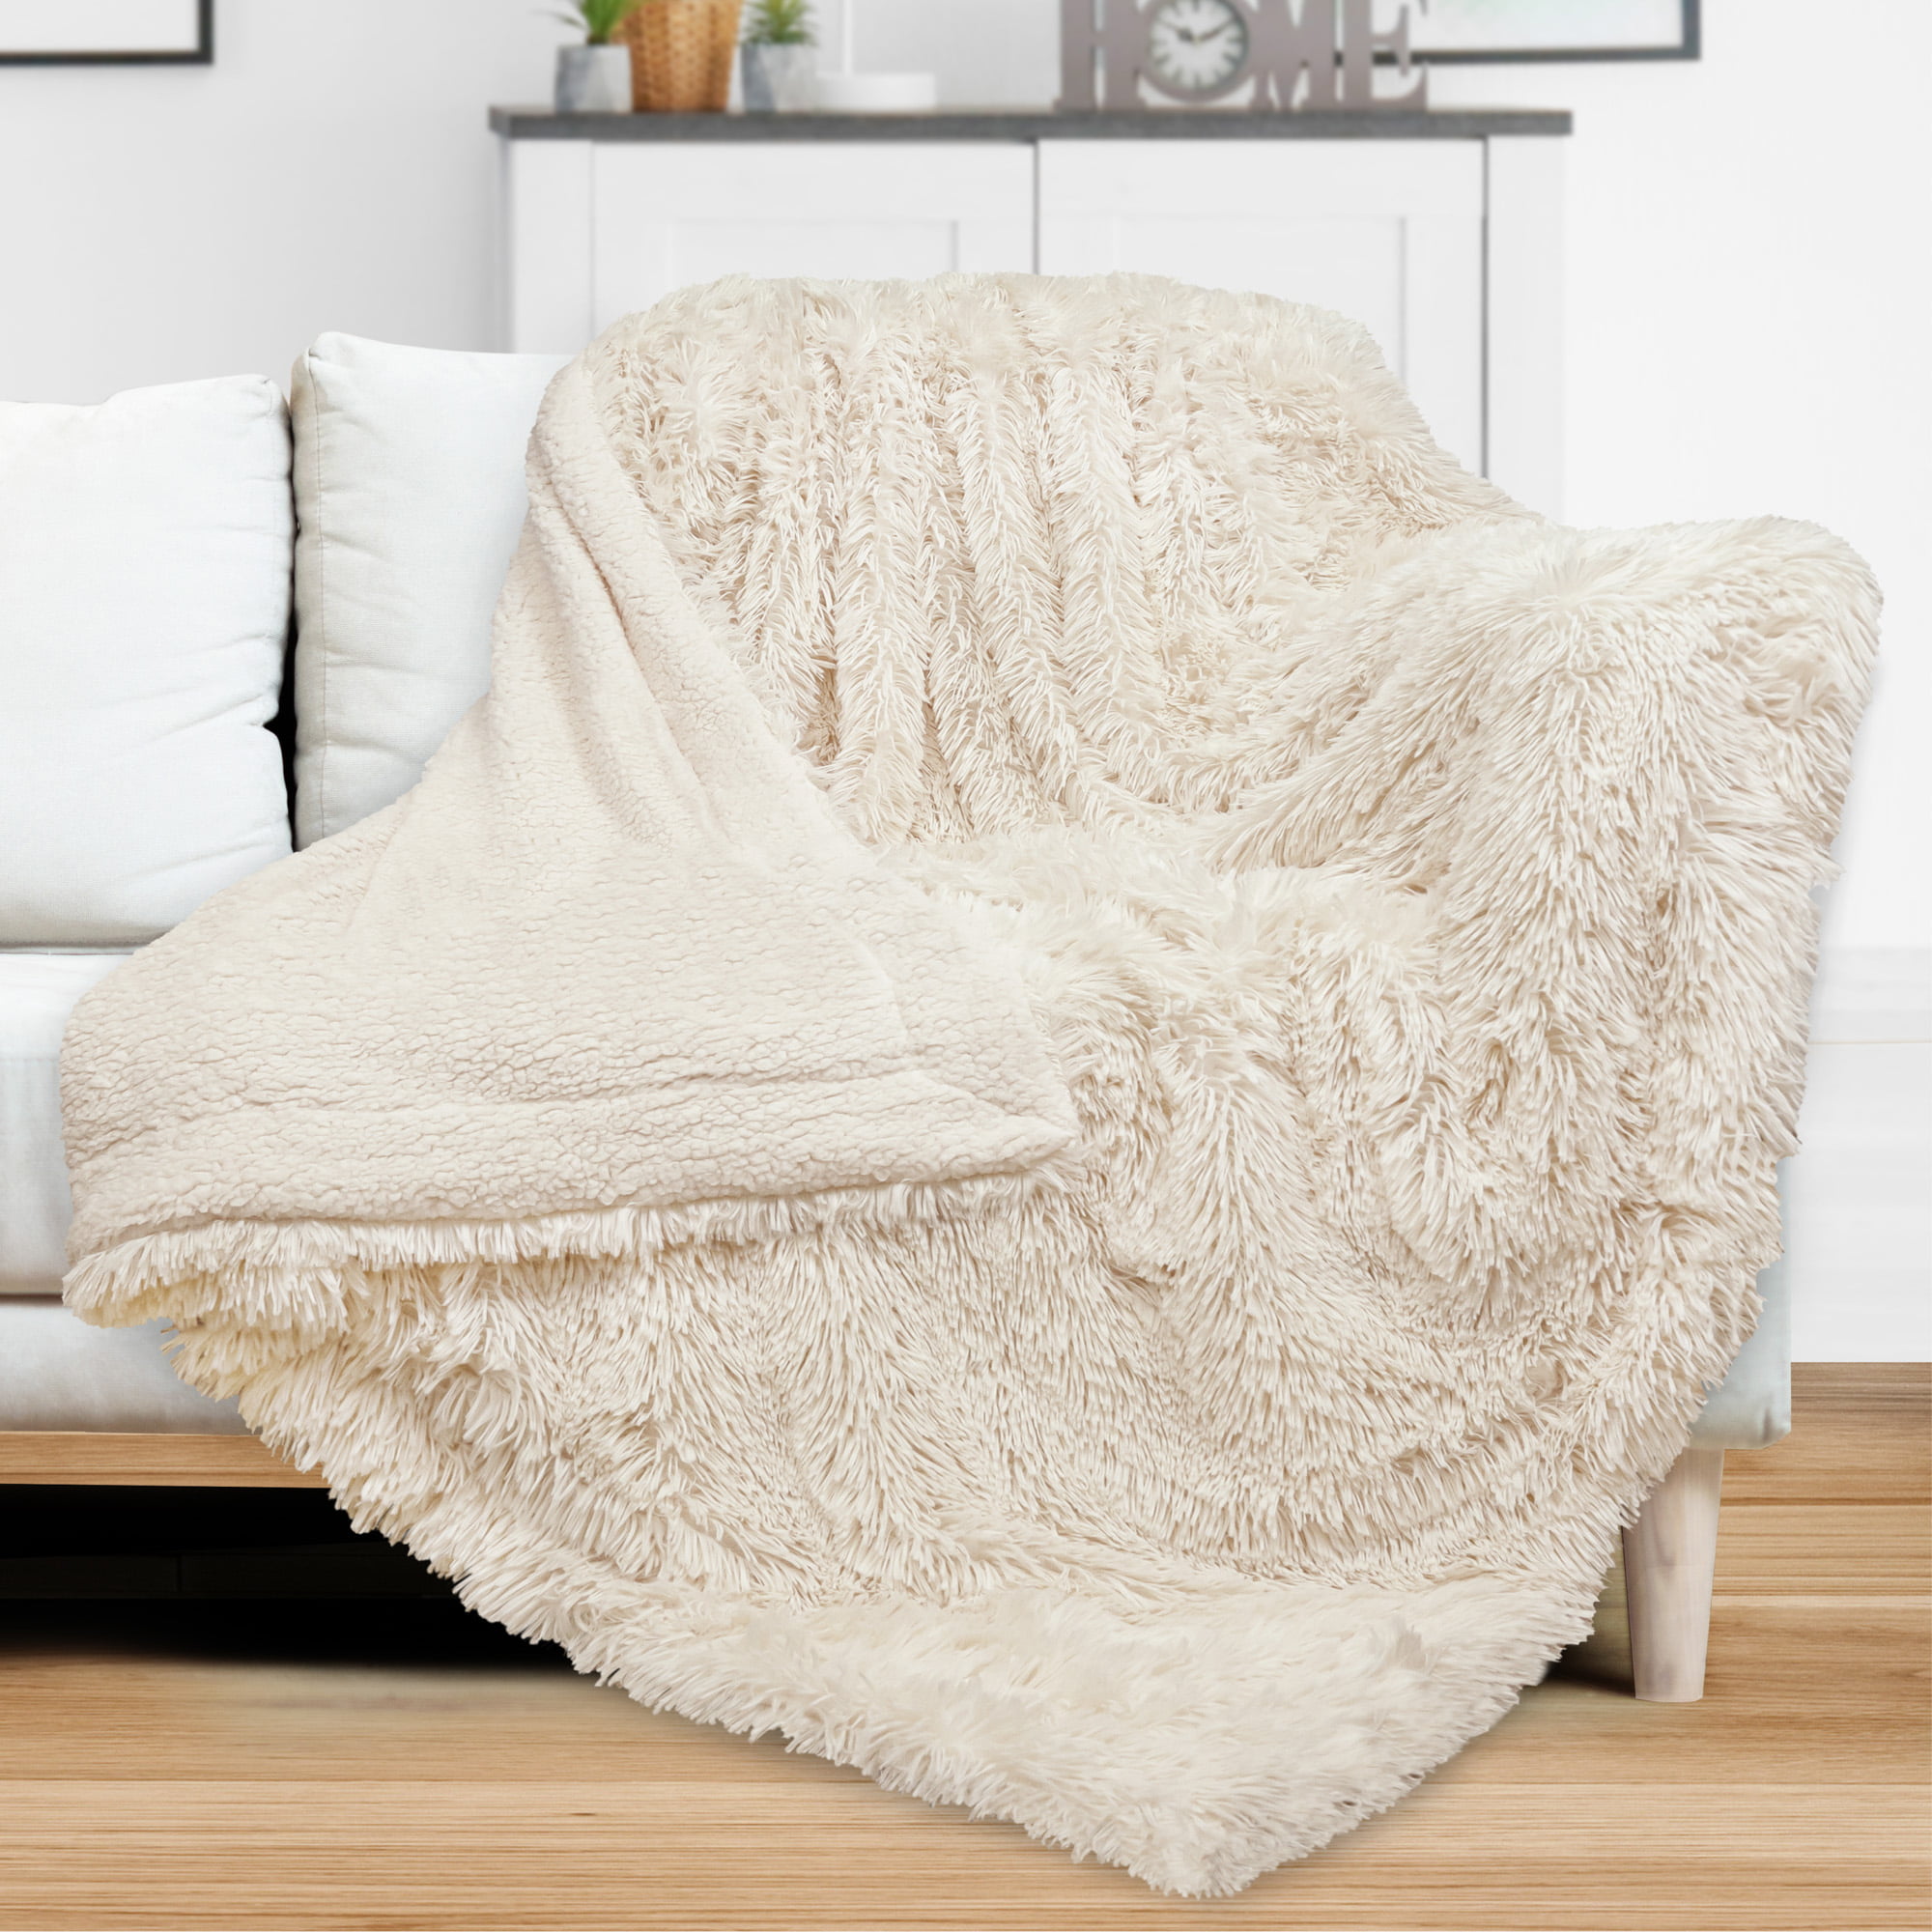 Cute Animal Sheep 50x 60 Fleece Flannel Blanket Soft Sherpa Throw Blanket Cozy Warm Fuzzy Decorative Blanket Nap Blanket All Season Blankets for Couch Sofa Bed Floor Throw Blanket